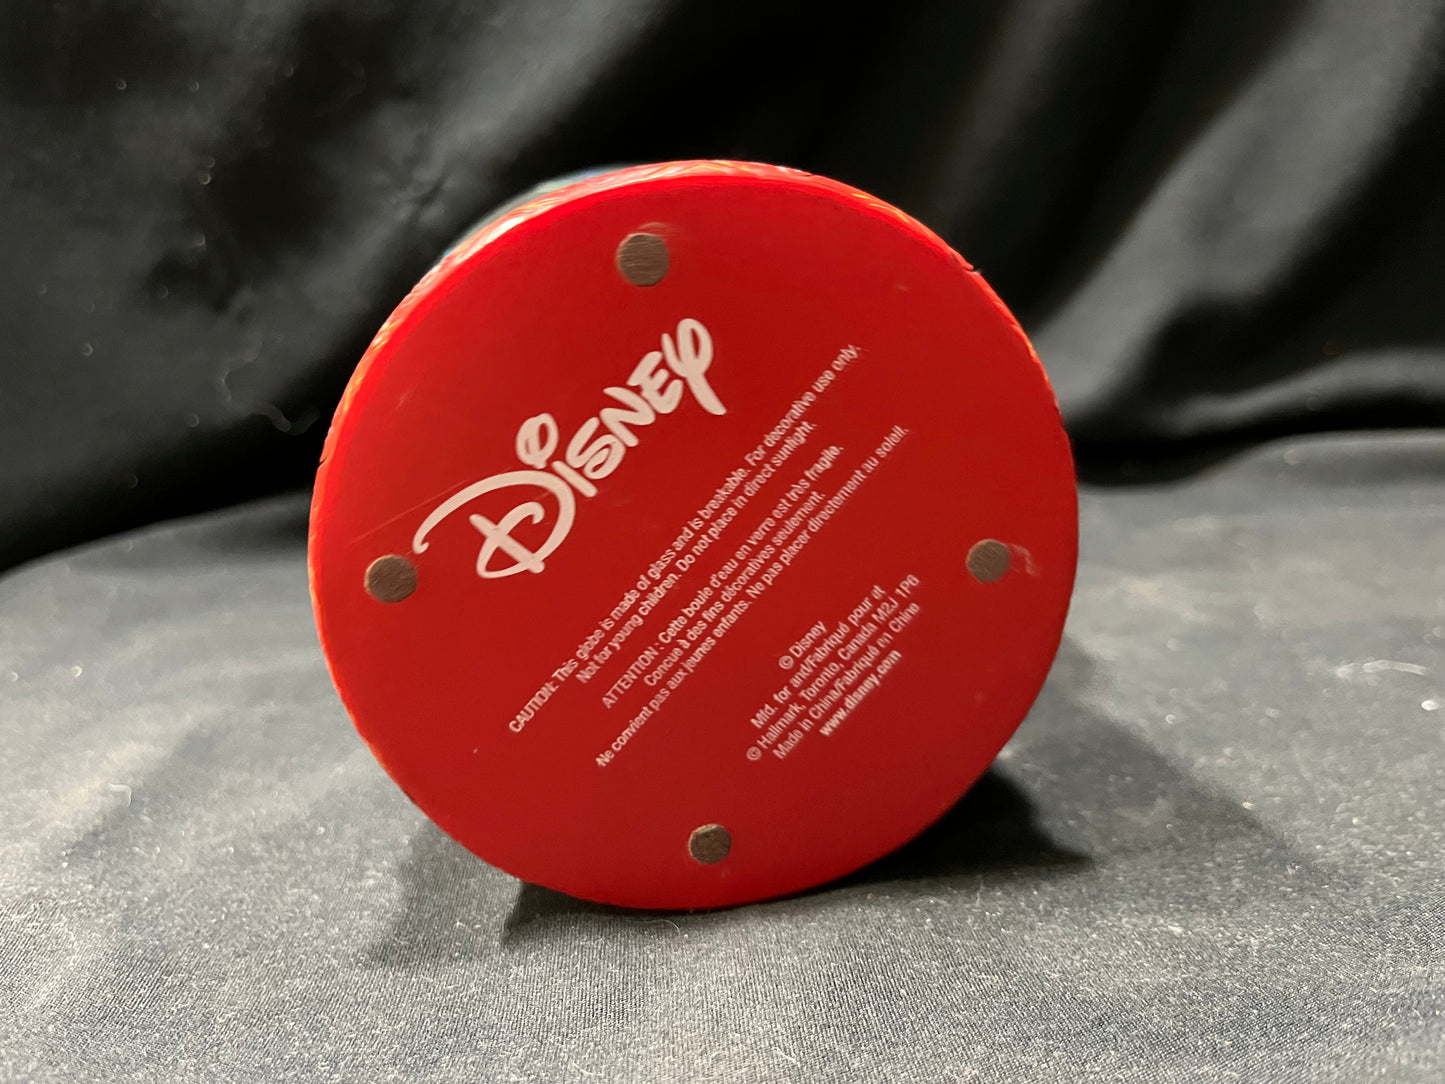 Disney Snow Globe The Lion King, Made for Hallmark